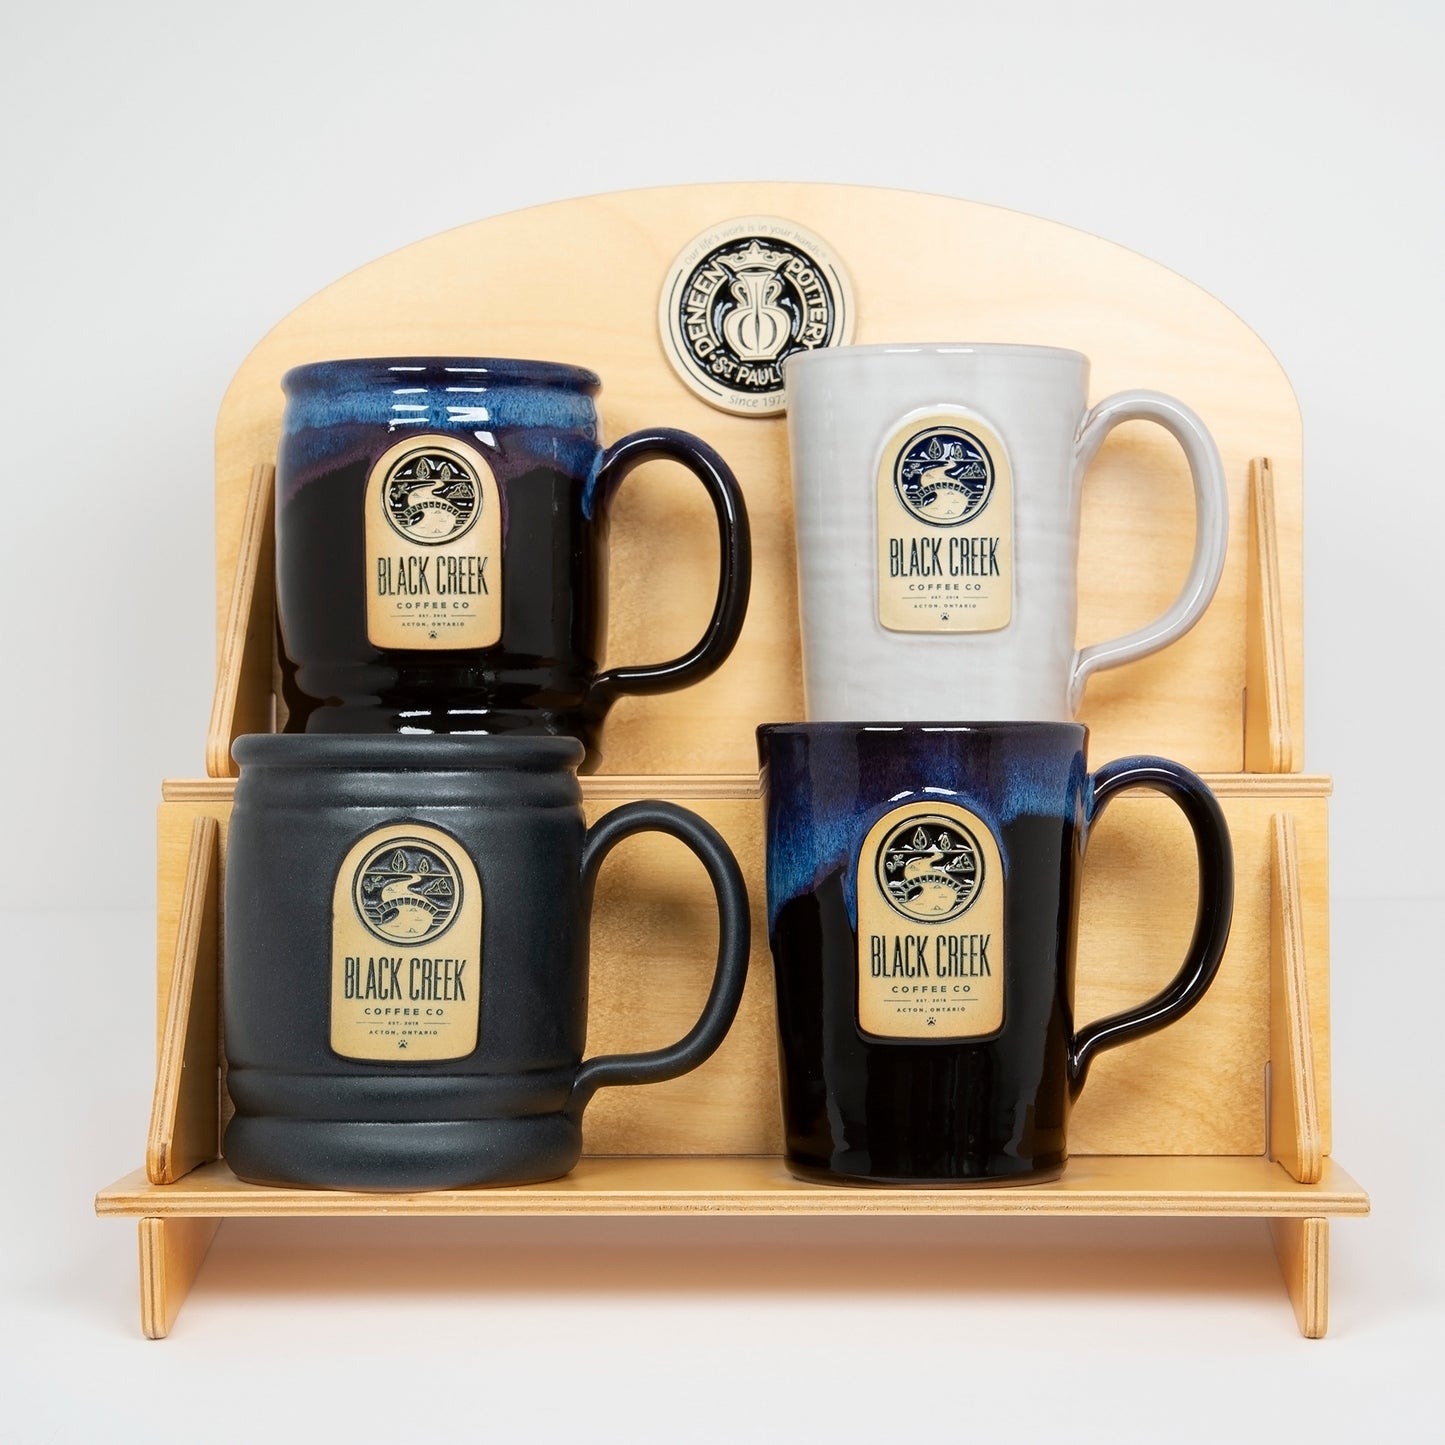 Black Creek Coffee Lumberjack Mug Galaxy